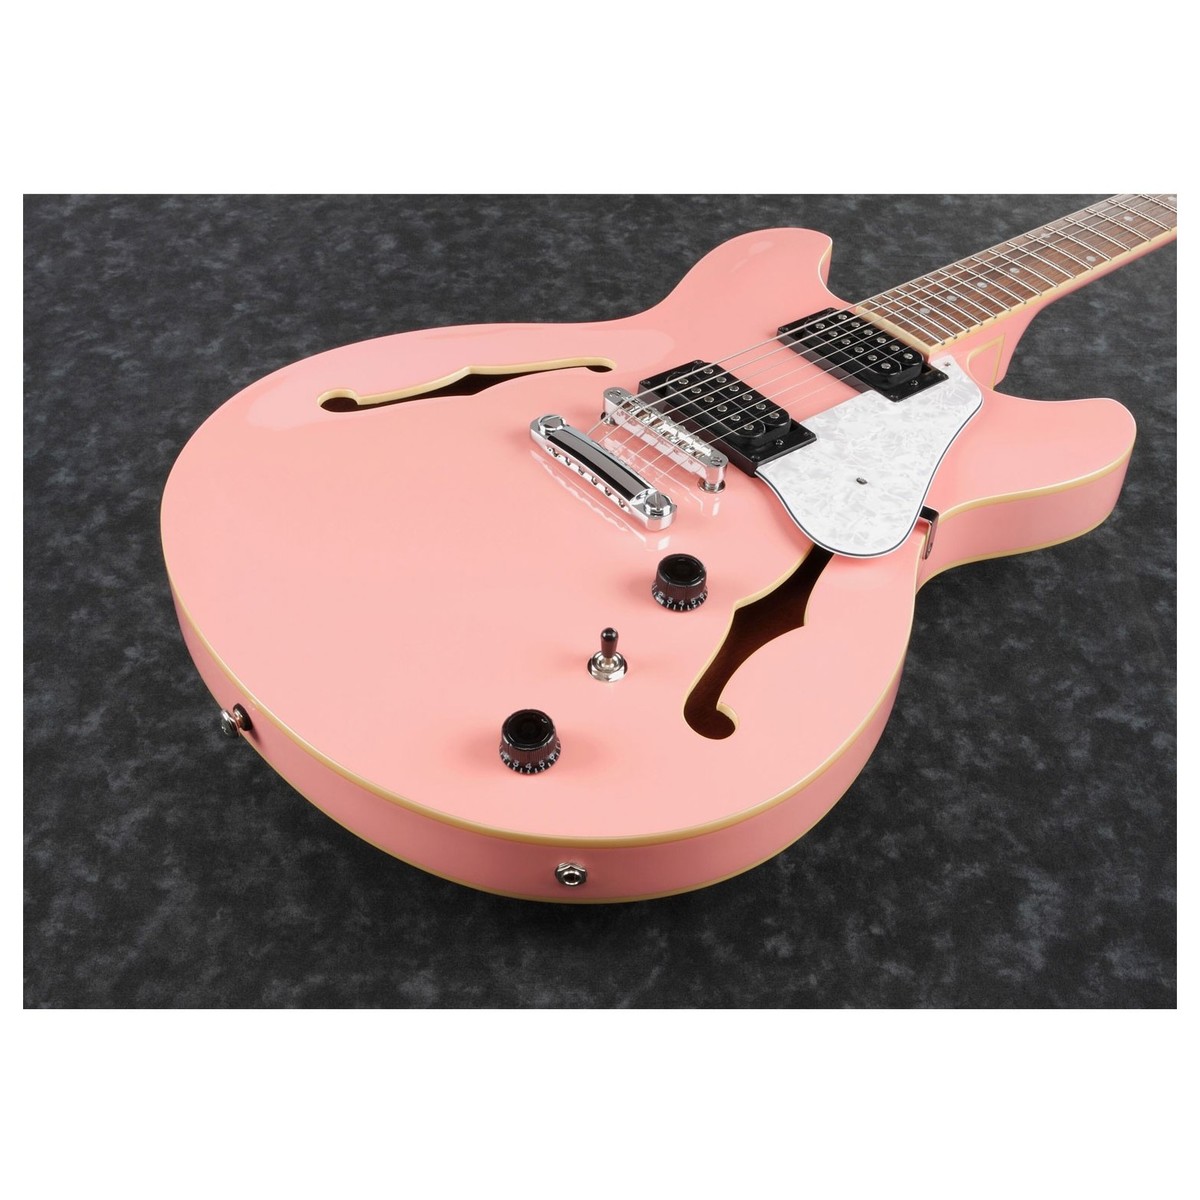 Ibanez As63 Crp Artcore Hh Ht Lau - Coral Pink - Semi-hollow electric guitar - Variation 1